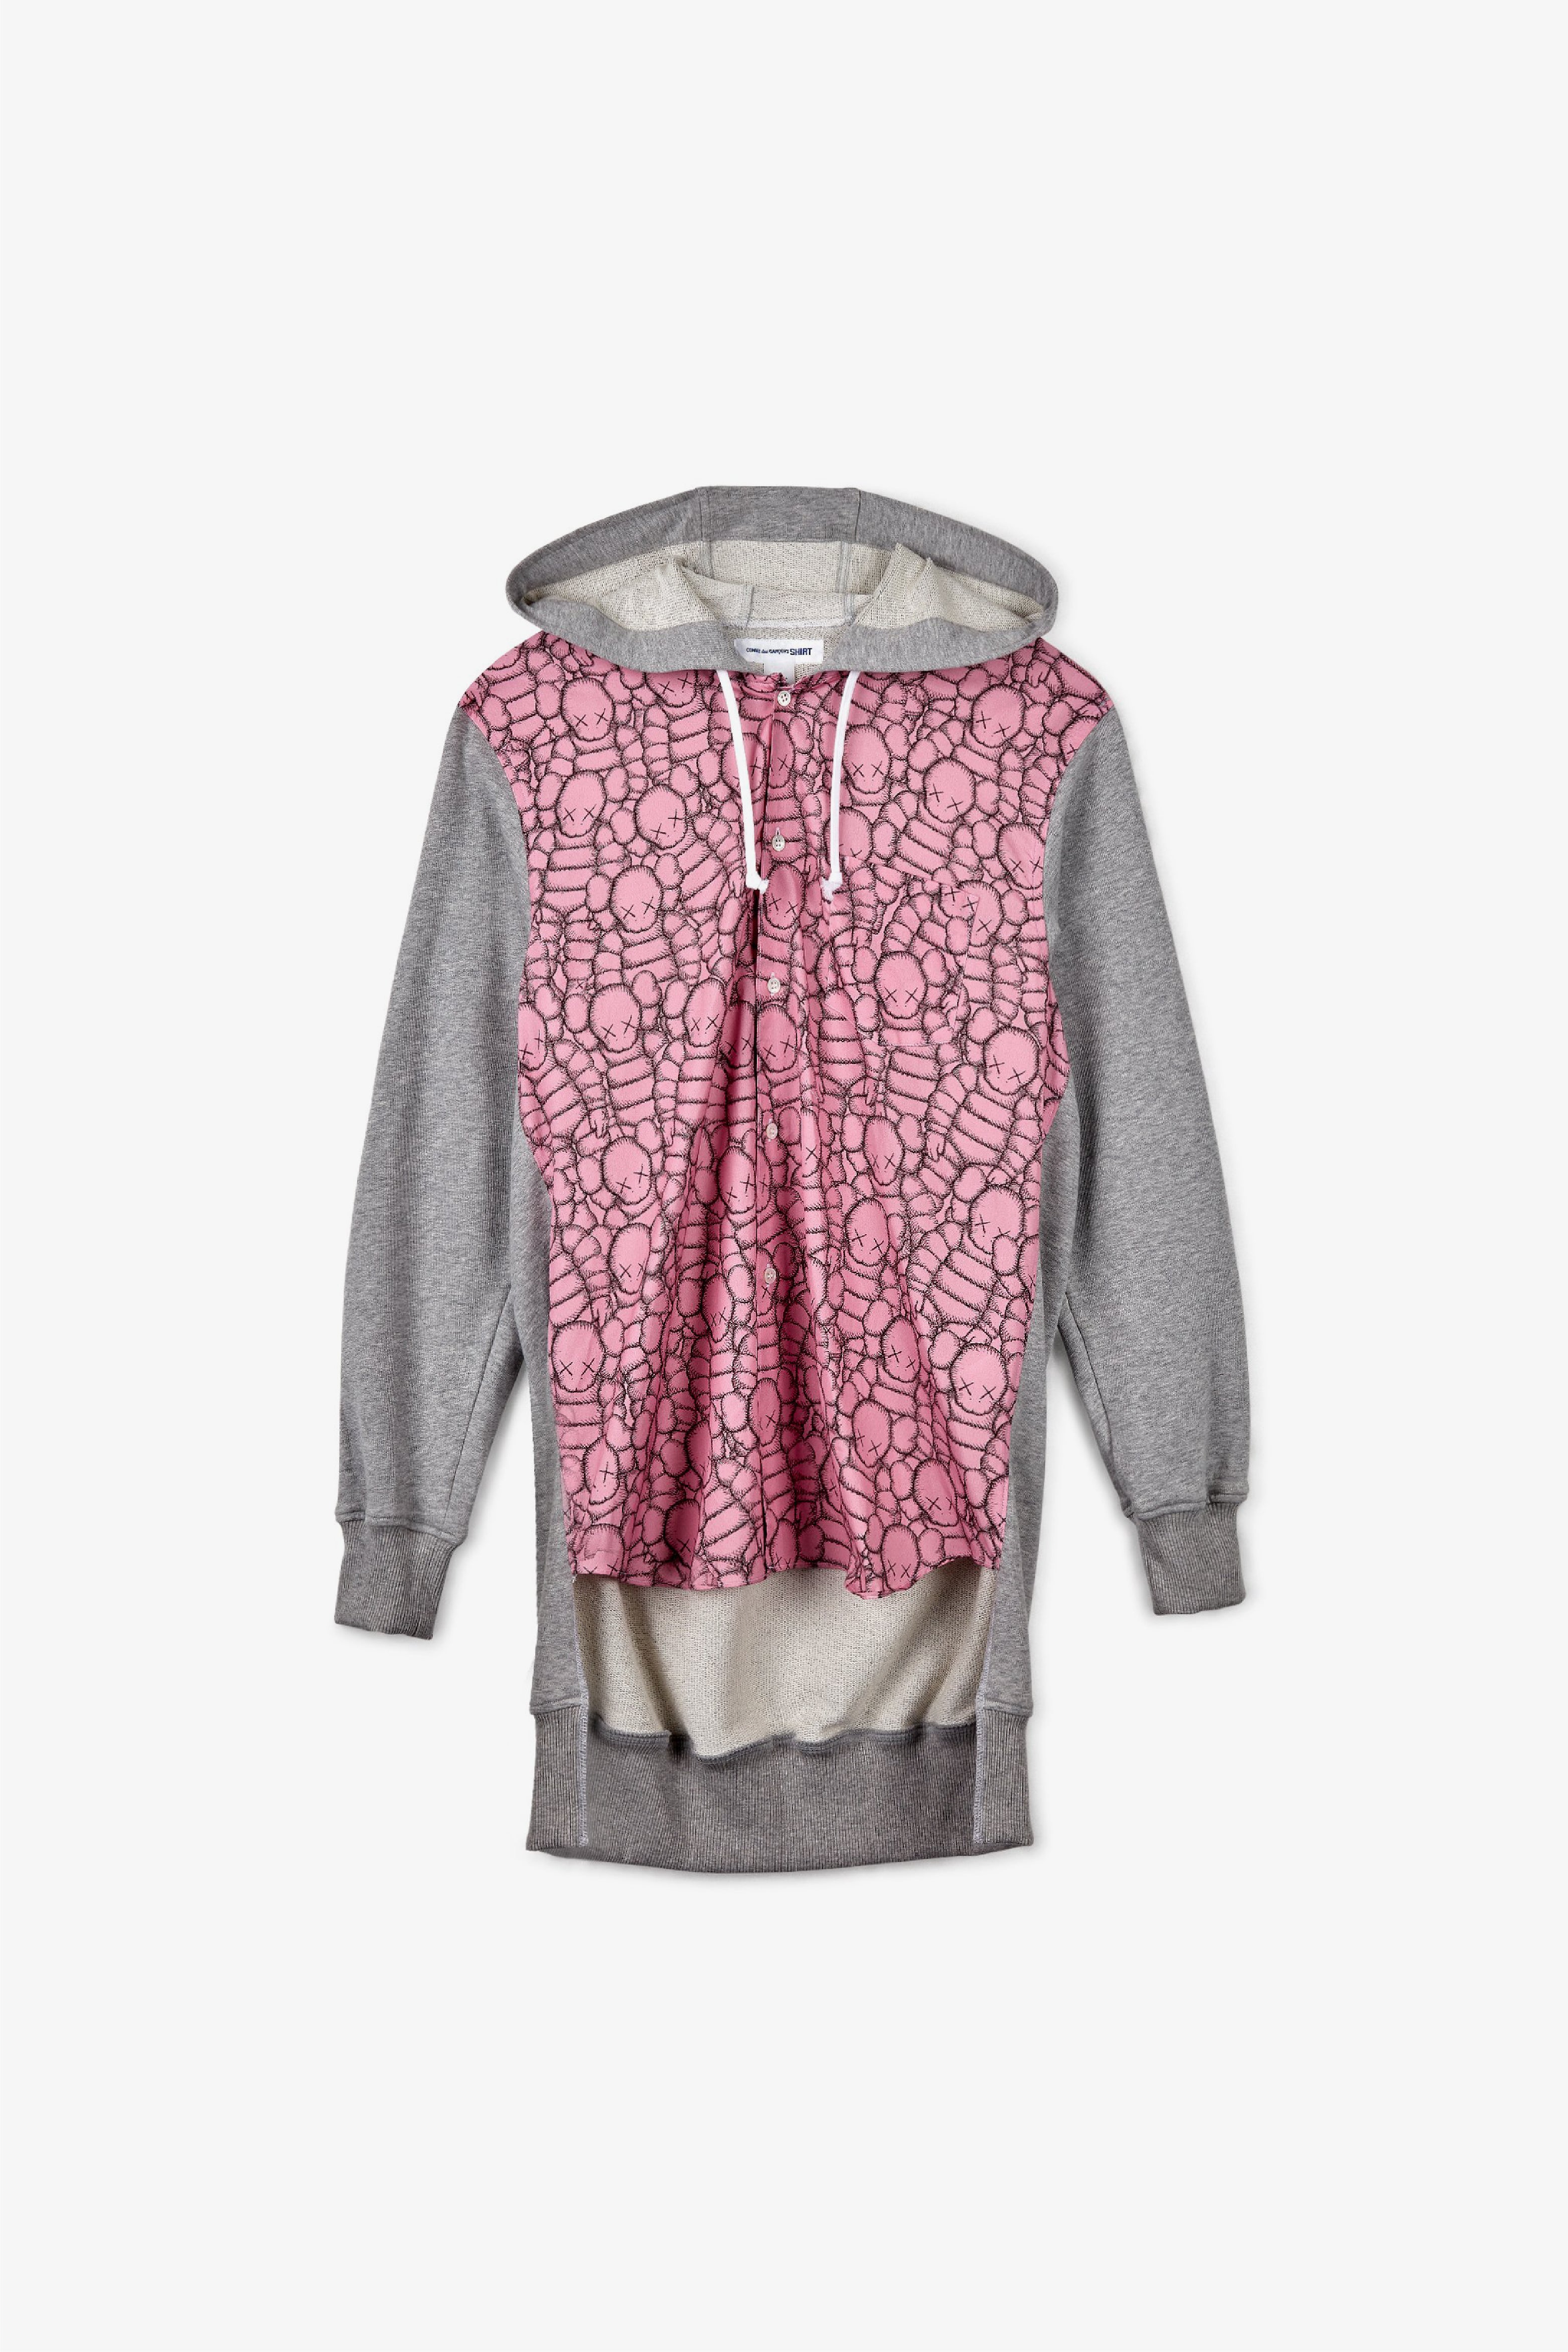 Selectshop FRAME - COMME DES GARCONS SHIRT KAWS Shirt Front Hoodie (Print B) Sweats-knits Dubai